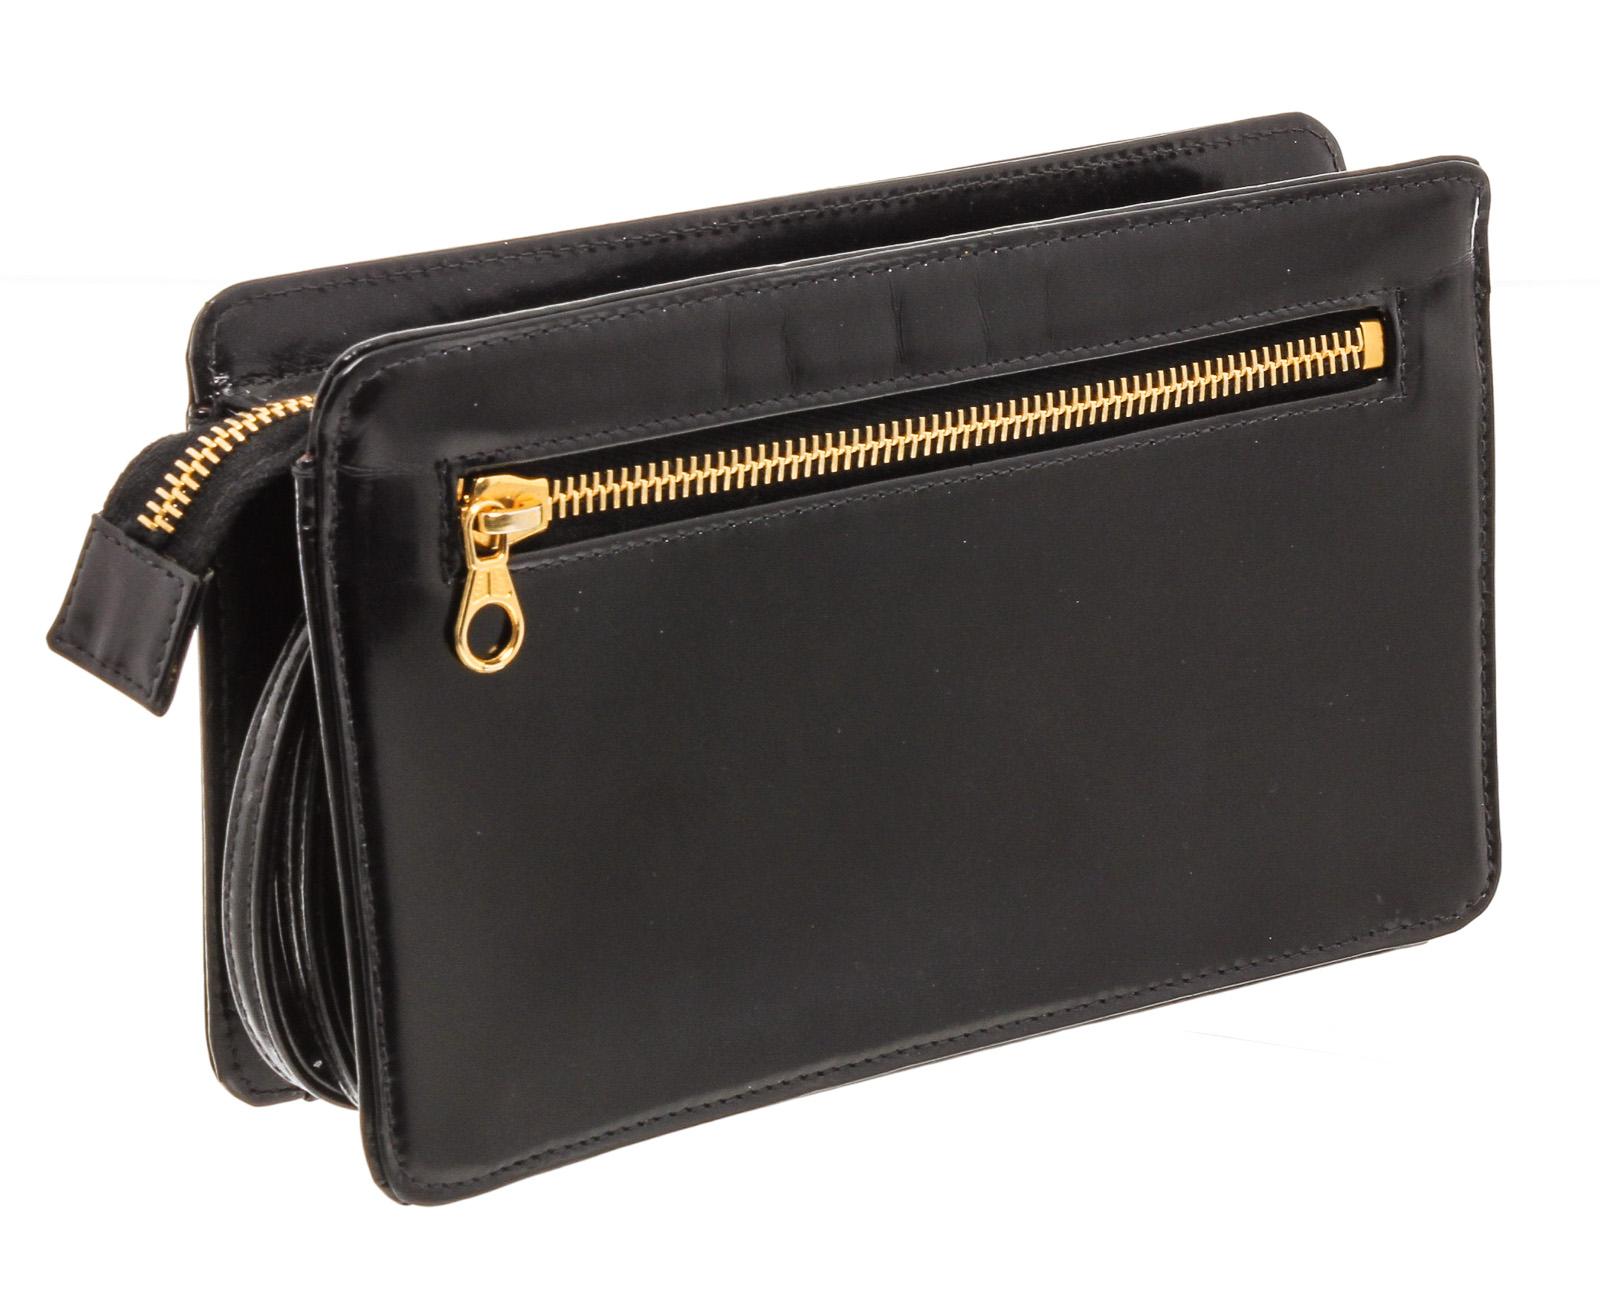 Chanel Vintage Black Patent Leather Wristlet Clutch Bag 1